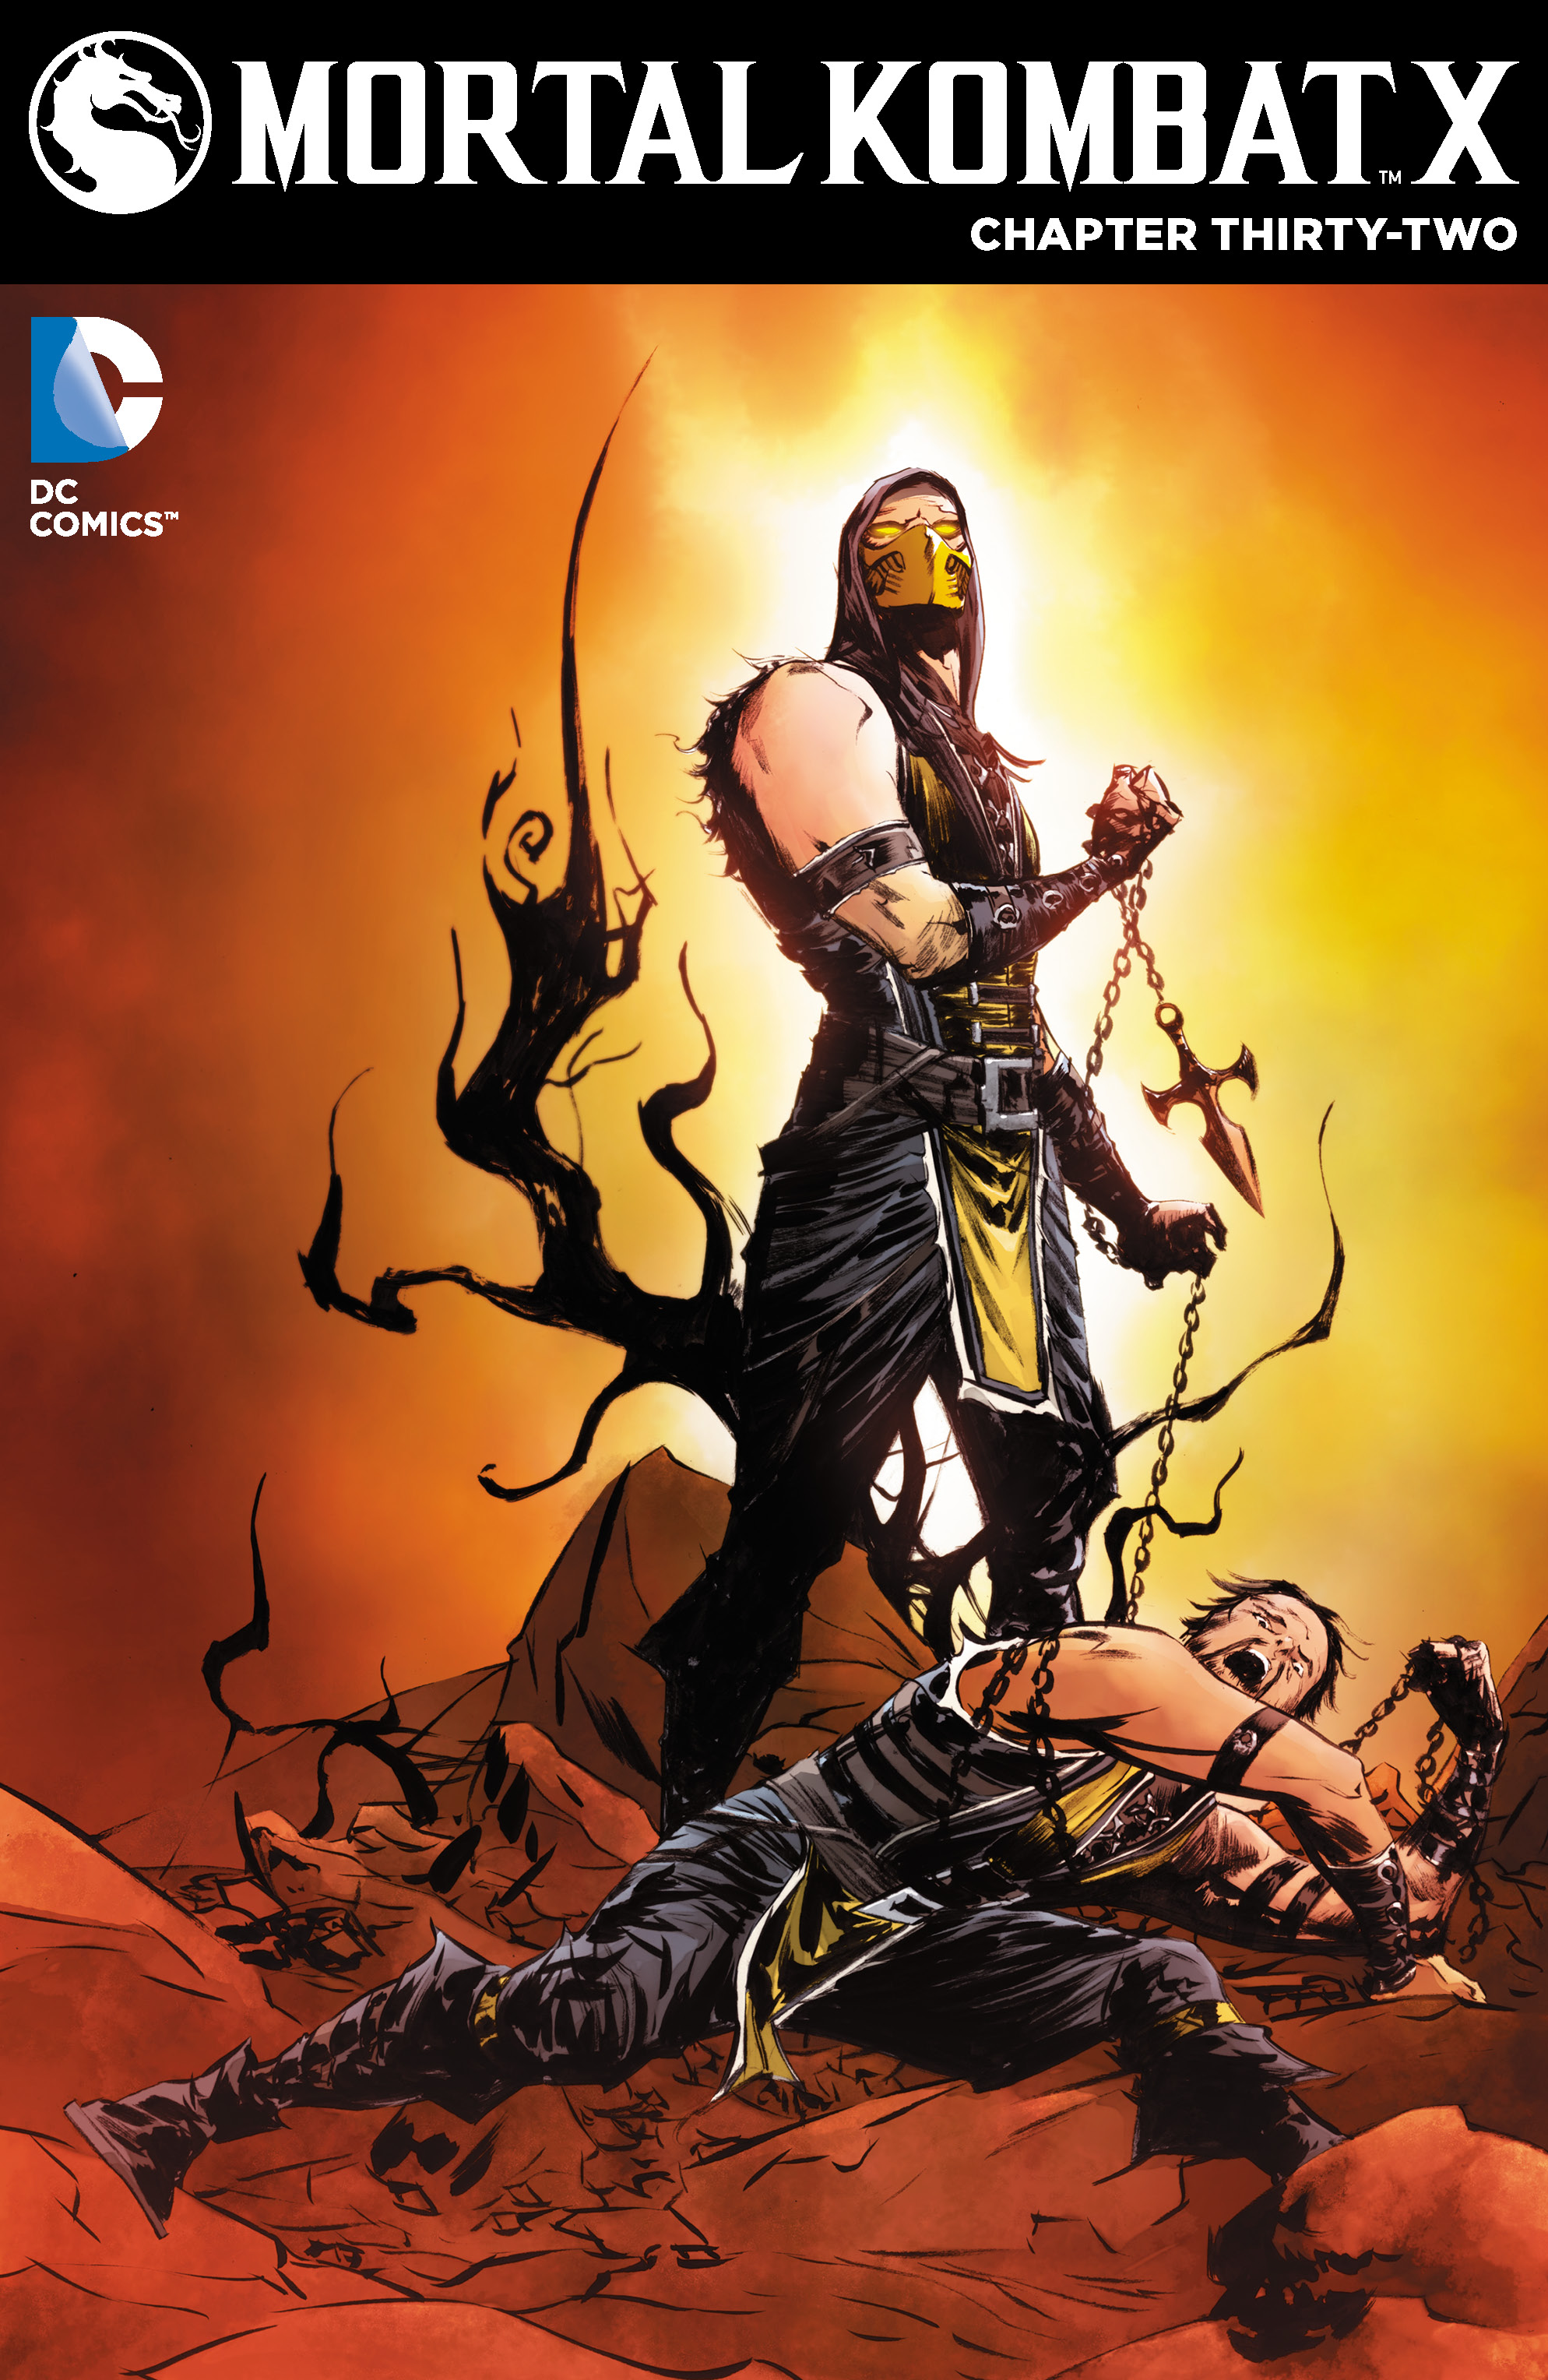 Mortal Kombat X #32 preview images